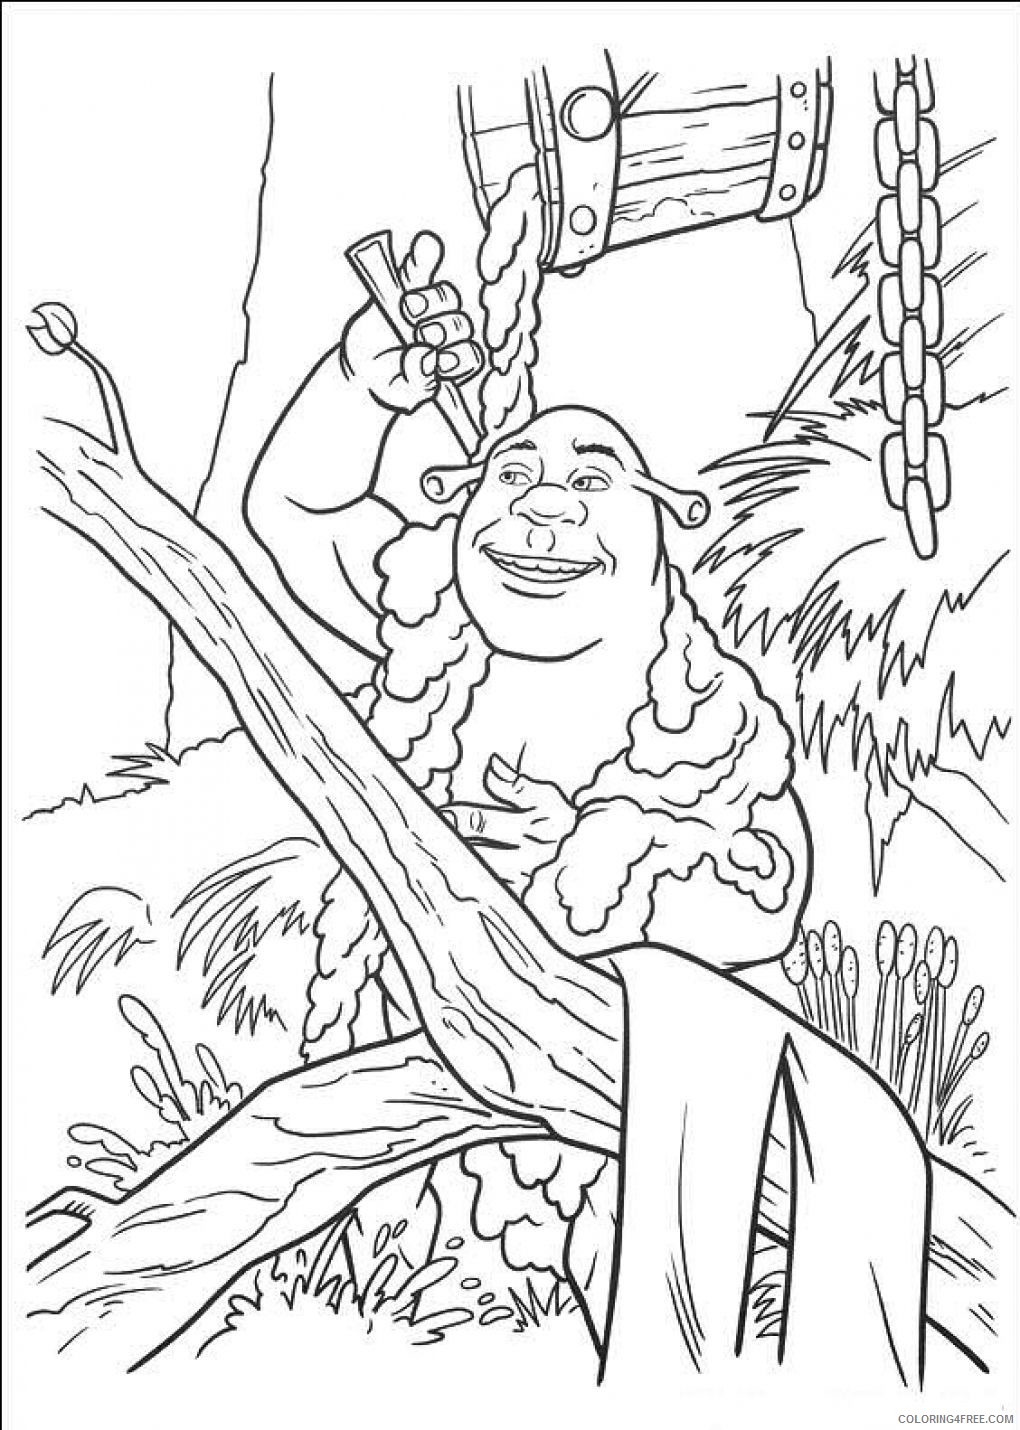 Shrek Coloring Pages Cartoons of Shrek Printable 2020 5408 Coloring4free